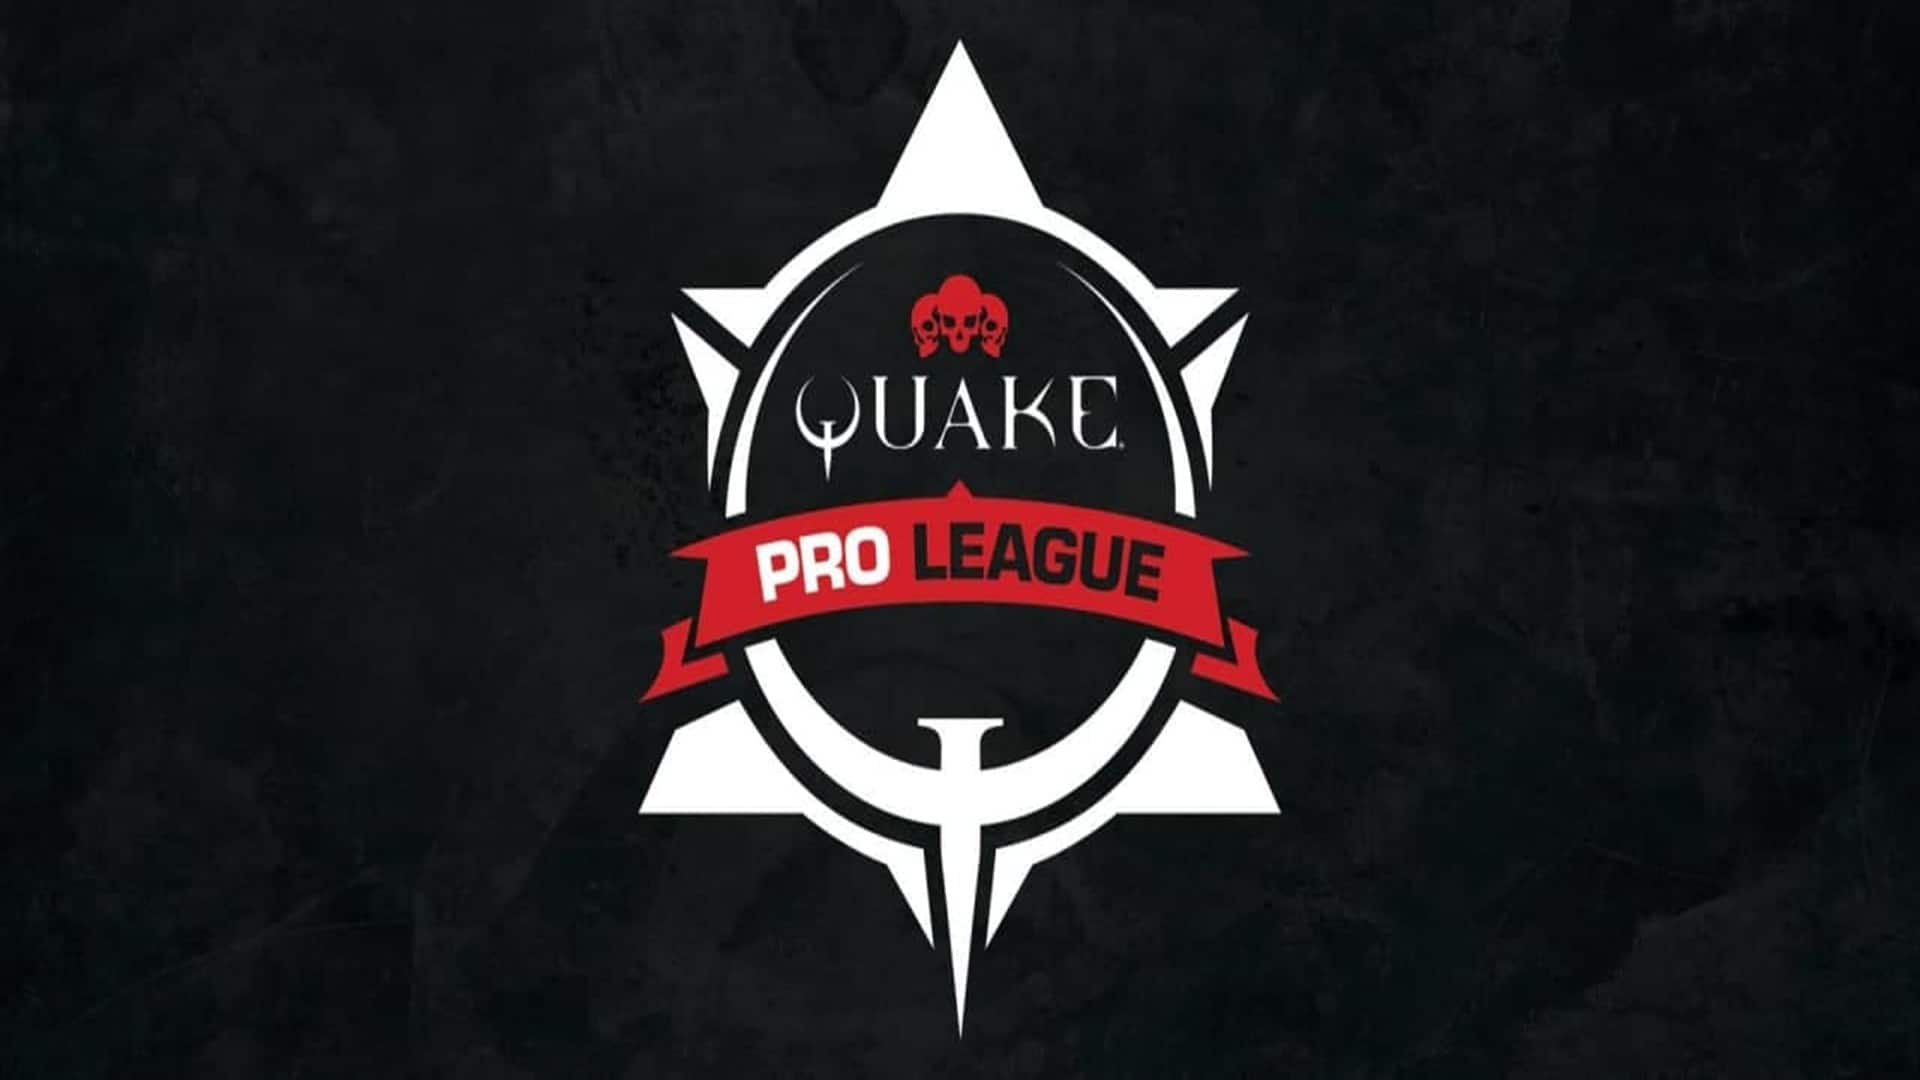 Quake Pro League banea a jugadores de Rusia y Bielorrusia, GamersRD